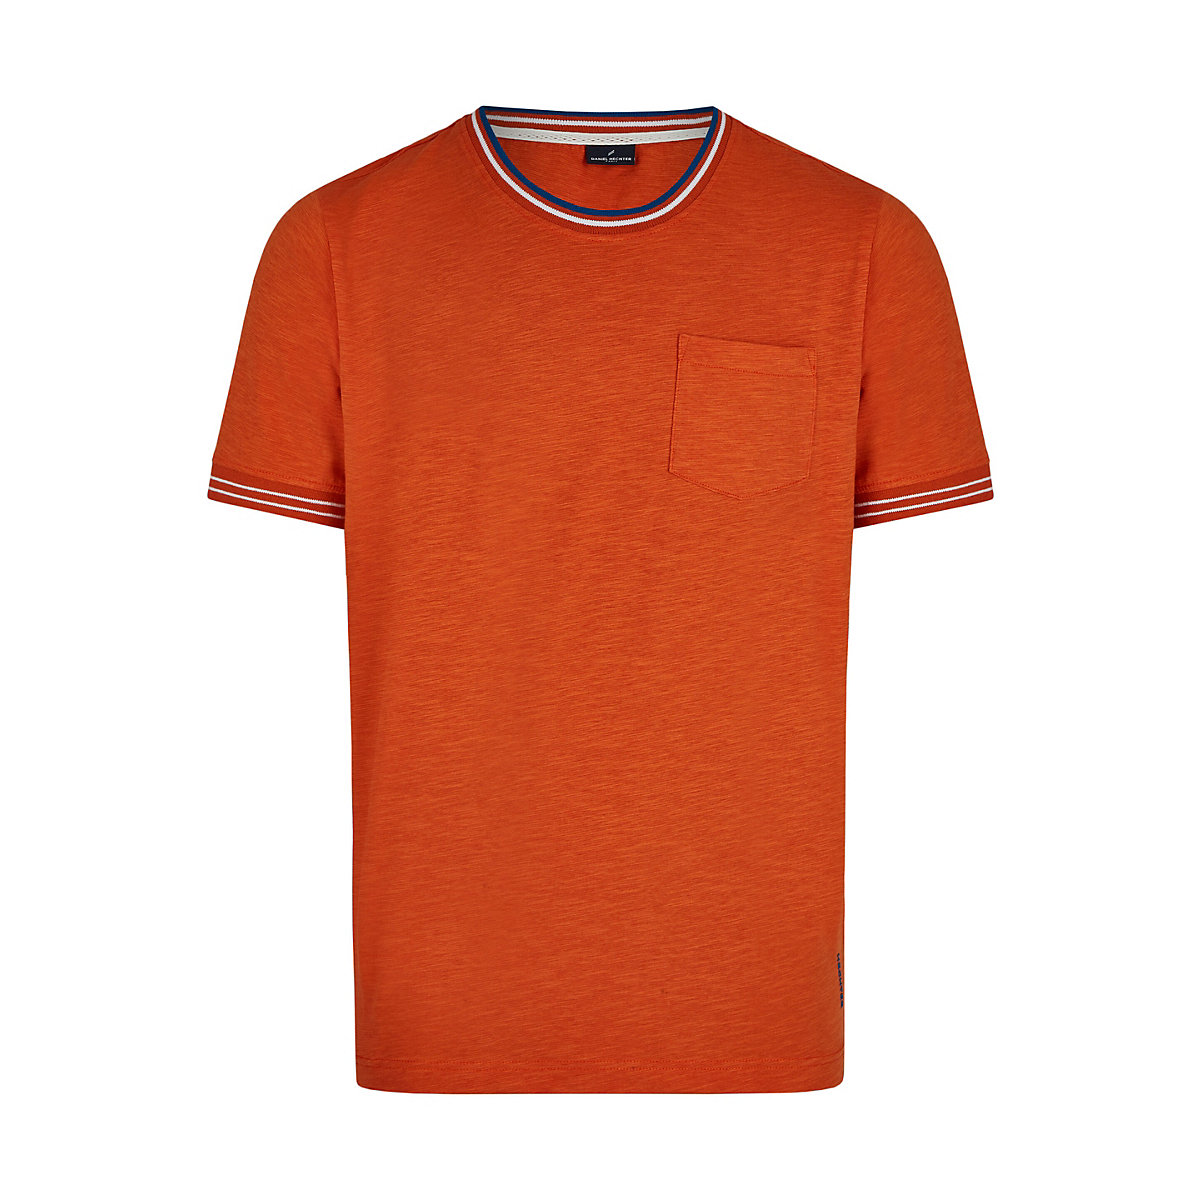 HECHTER PARIS Shirt orange